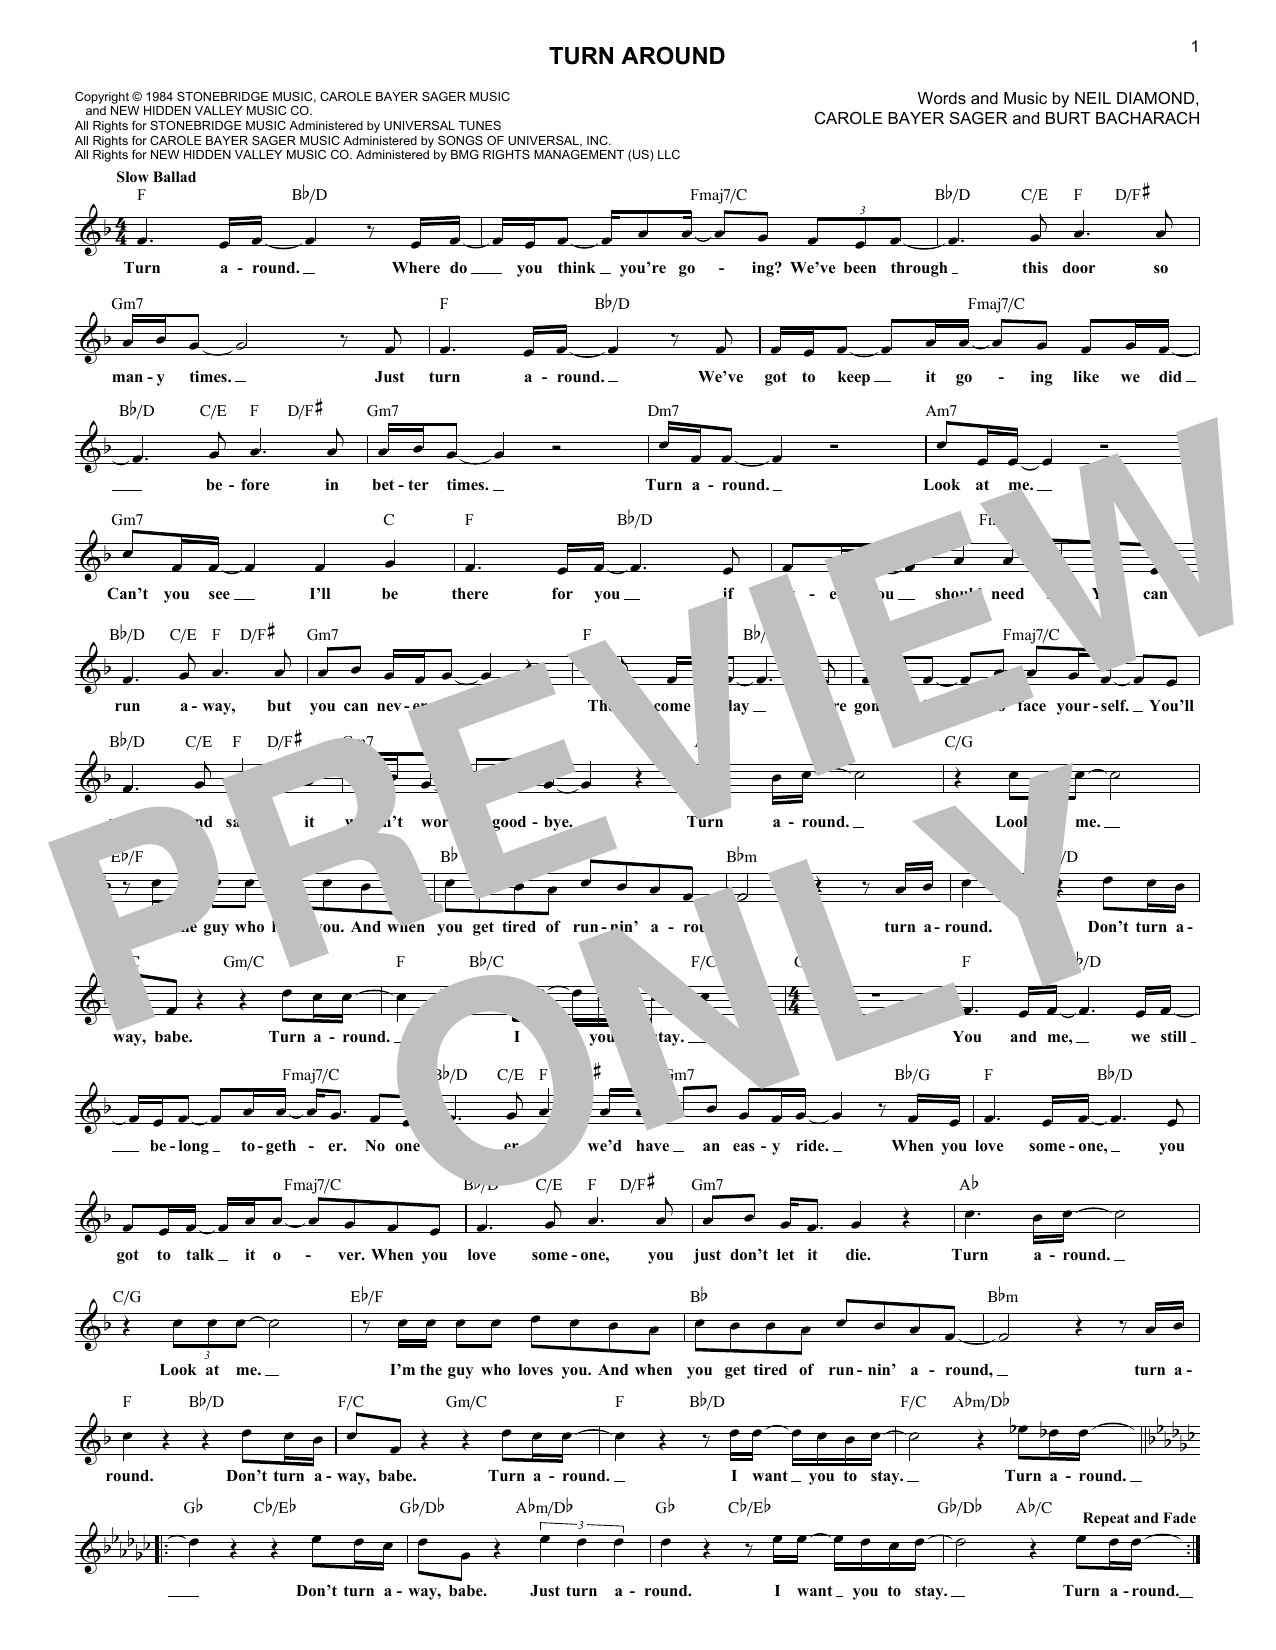 Burt Bacharach Turn Around Sheet Music Notes & Chords for Lead Sheet / Fake Book - Download or Print PDF